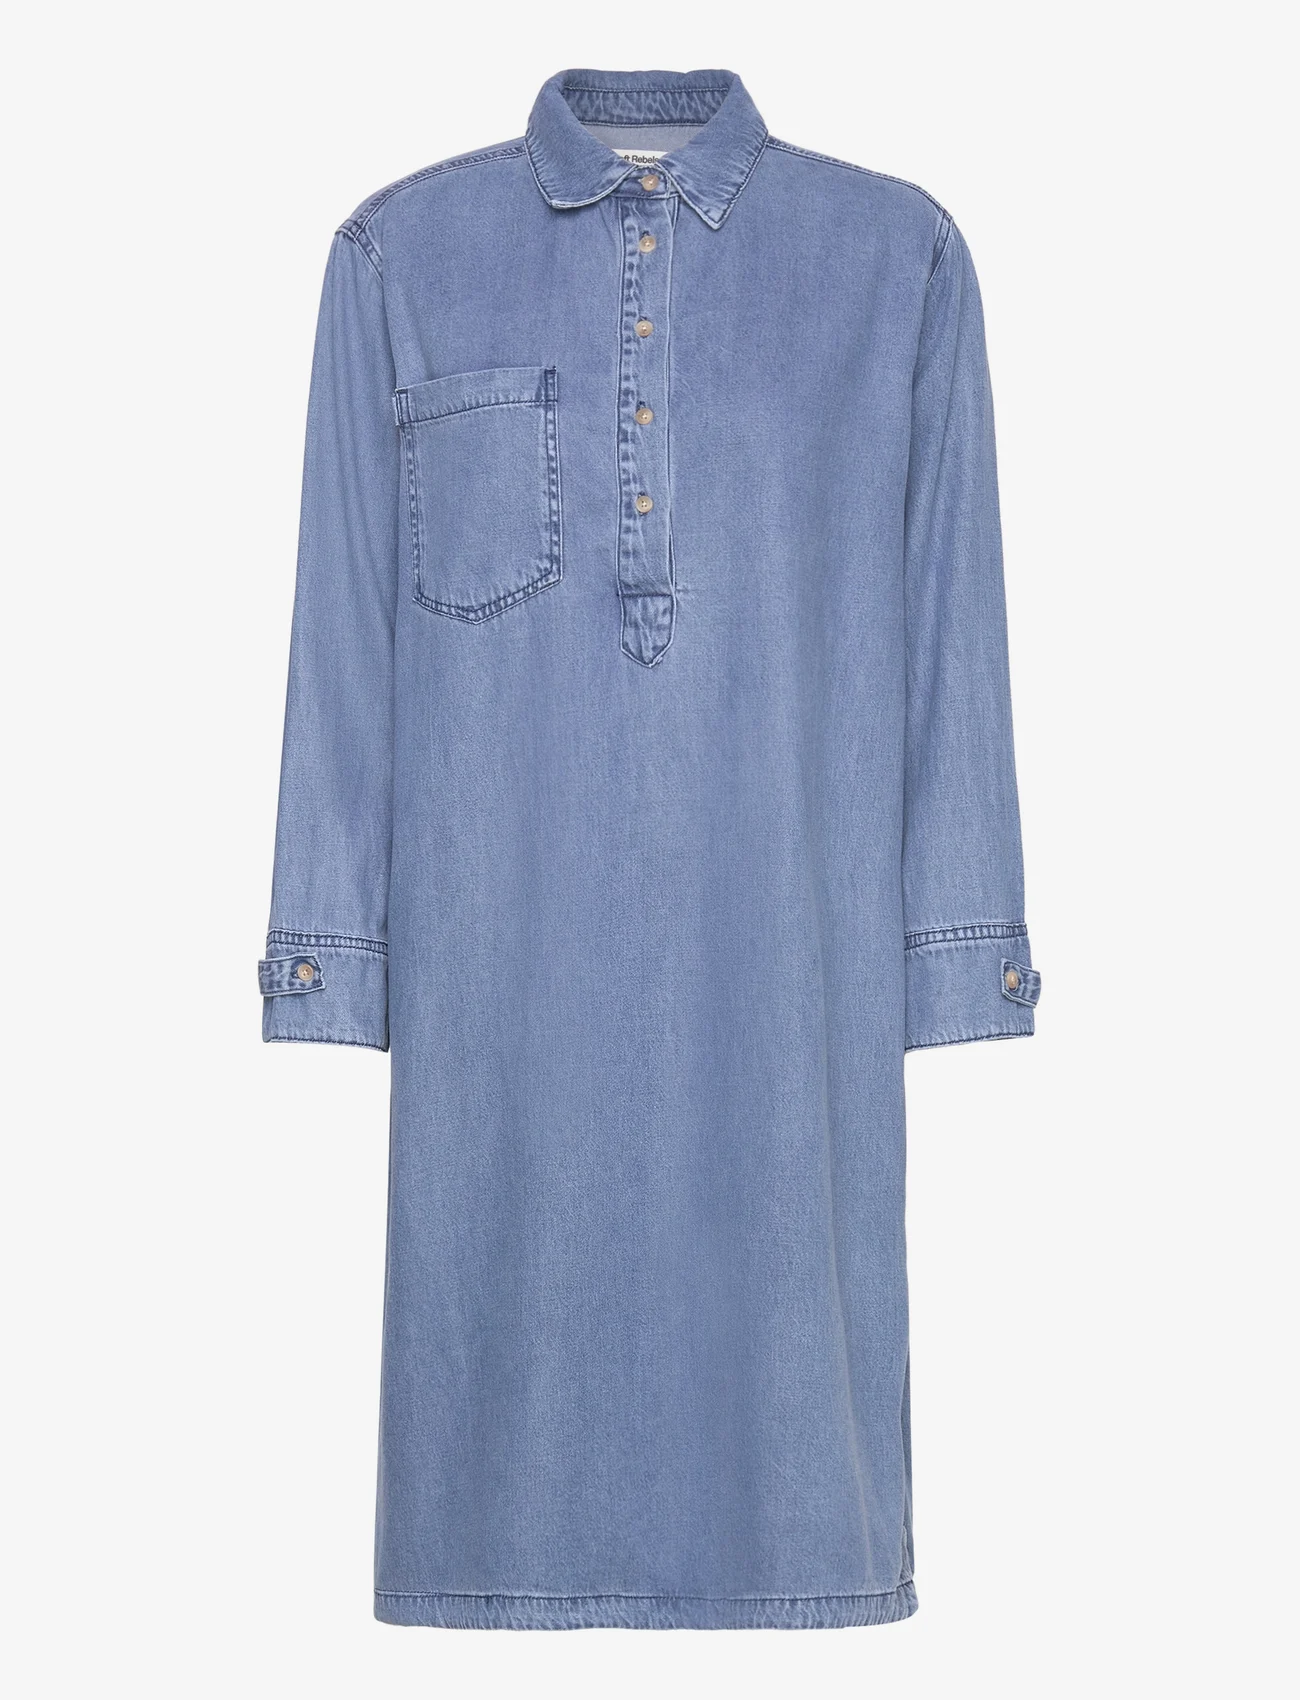 Soft Rebels - SRLila Midi Dress - vidutinio ilgio suknelės - medium blue wash - 0